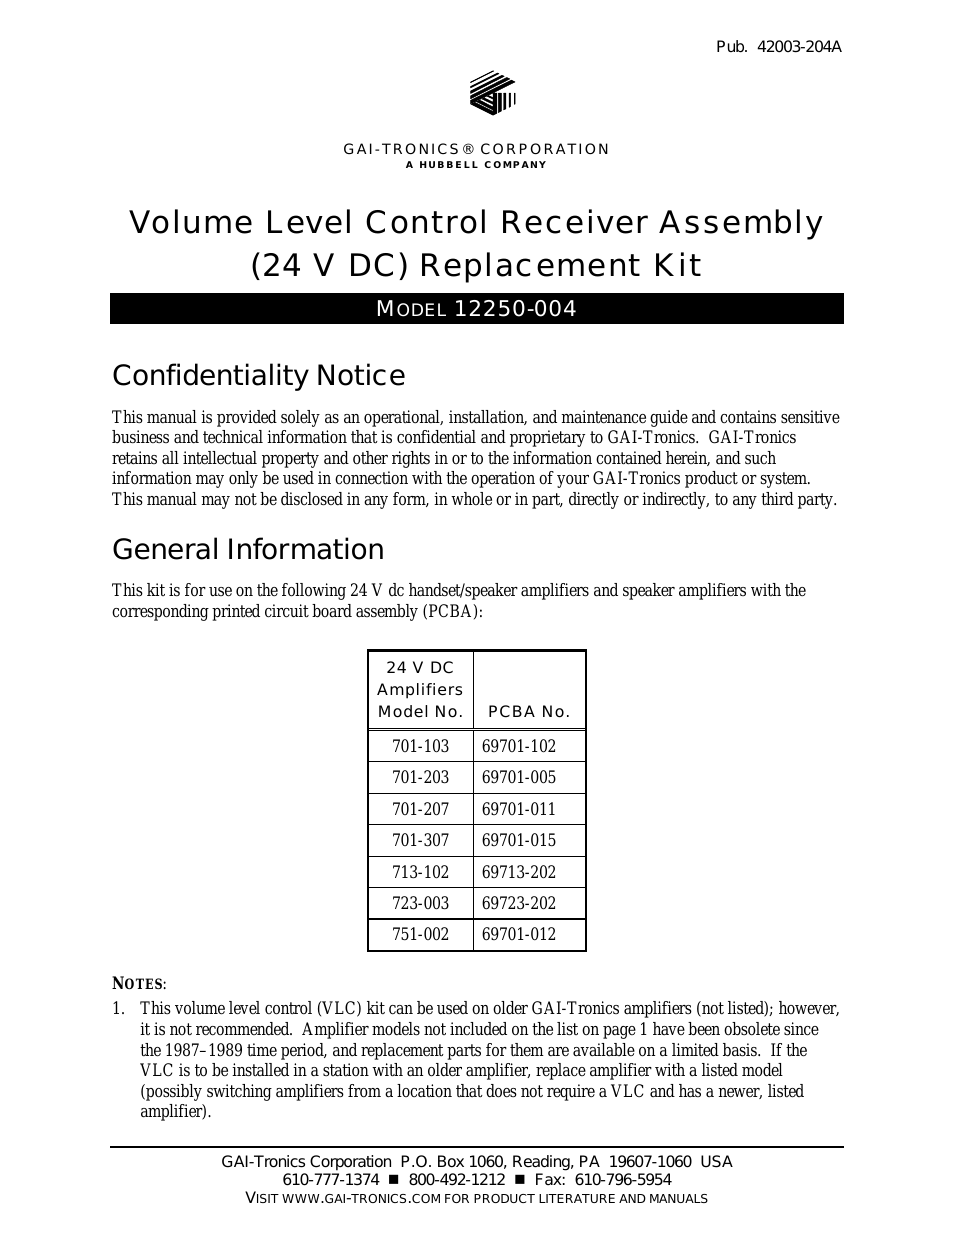 12250-004 Volume Level Control Receiver Assembly (24 V dc)